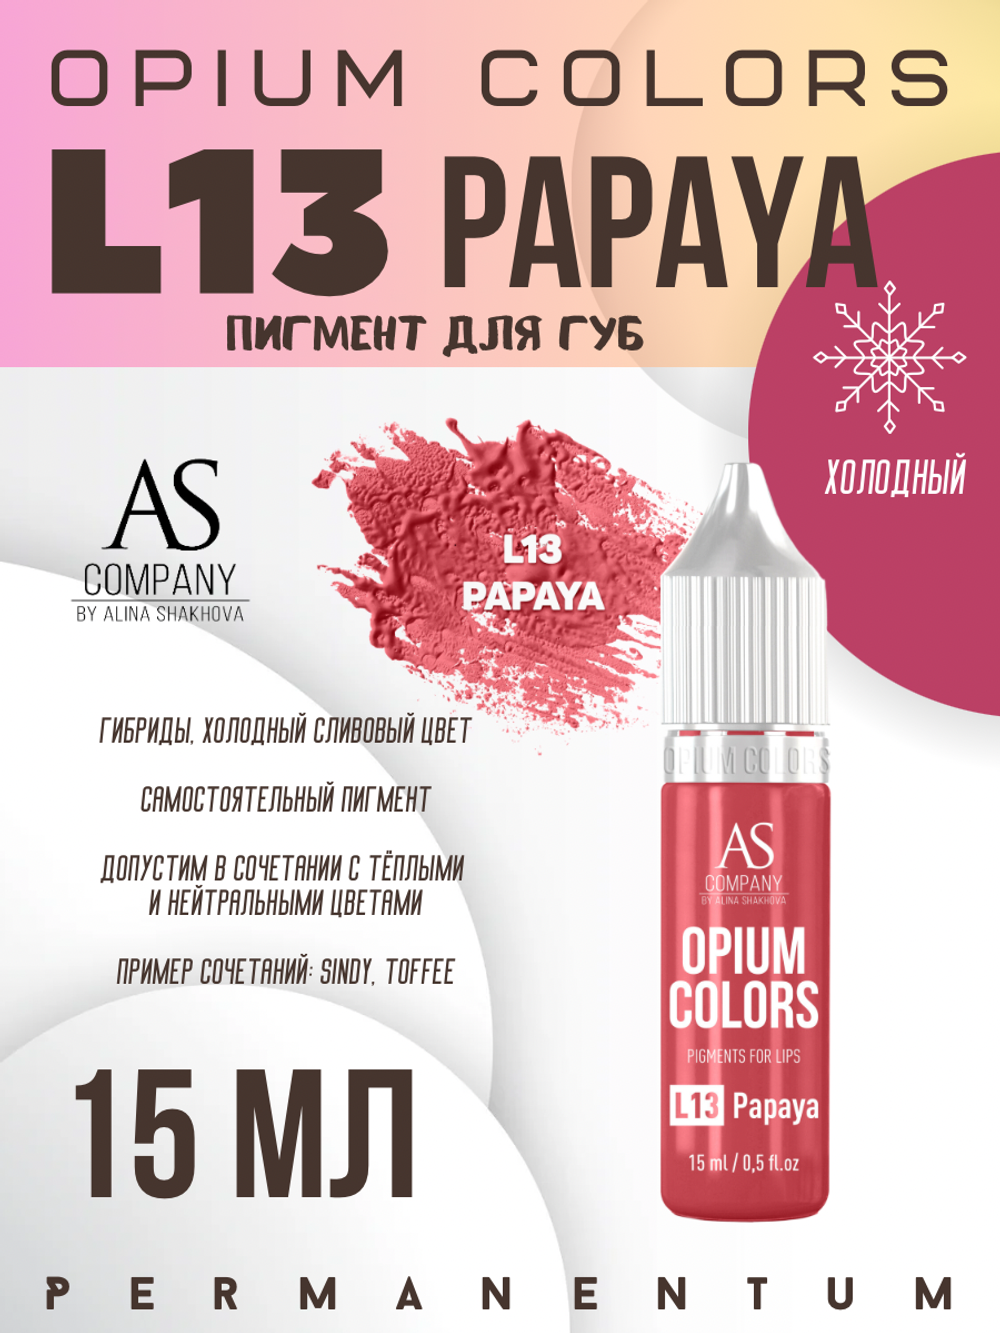 L13 PAPAYA пигмент для губ TM AS-Company OPIUM COLORS